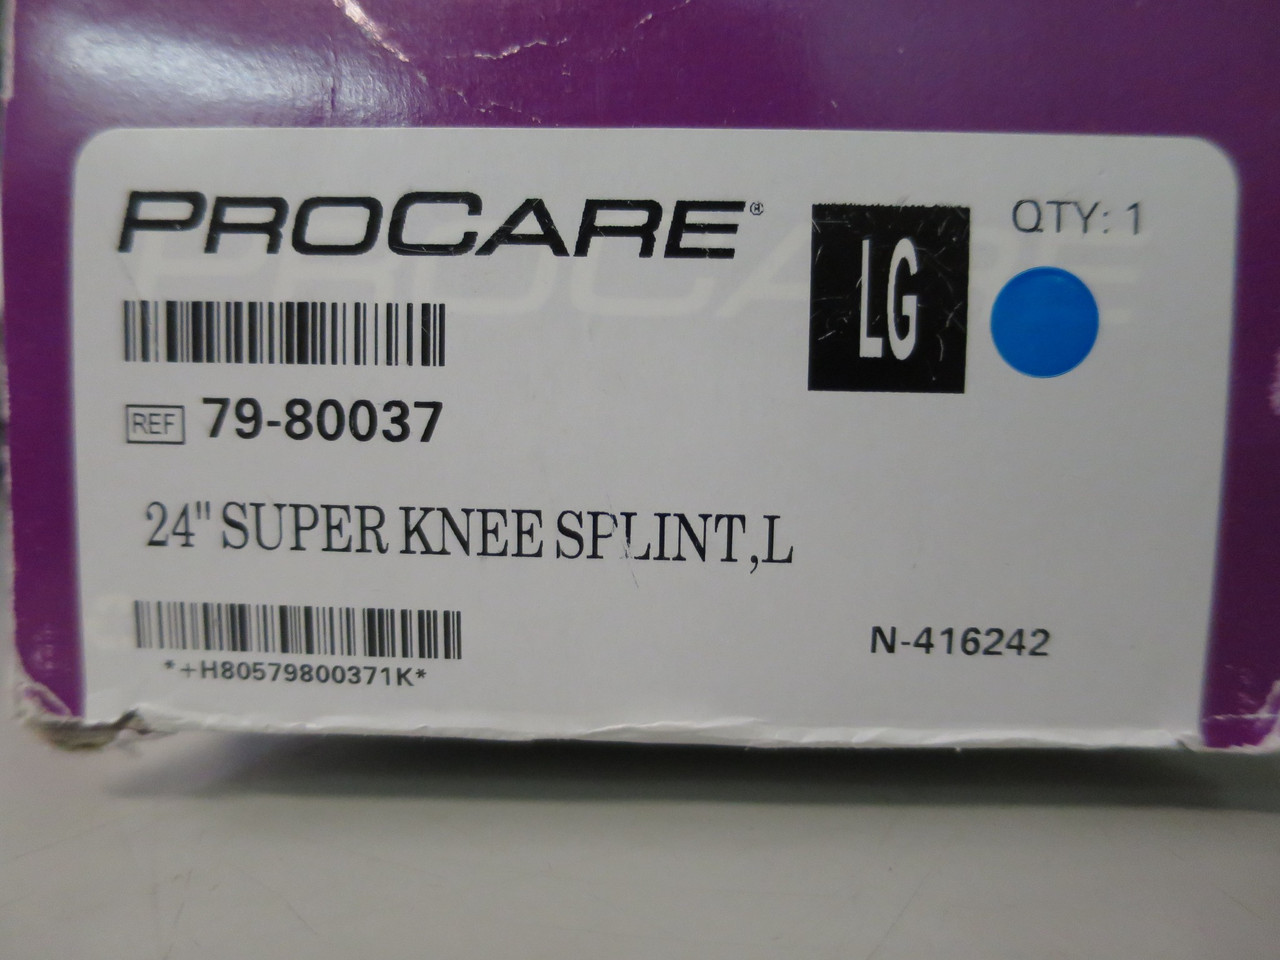 24" Super Knee Splint Size LG Procare 79-80037